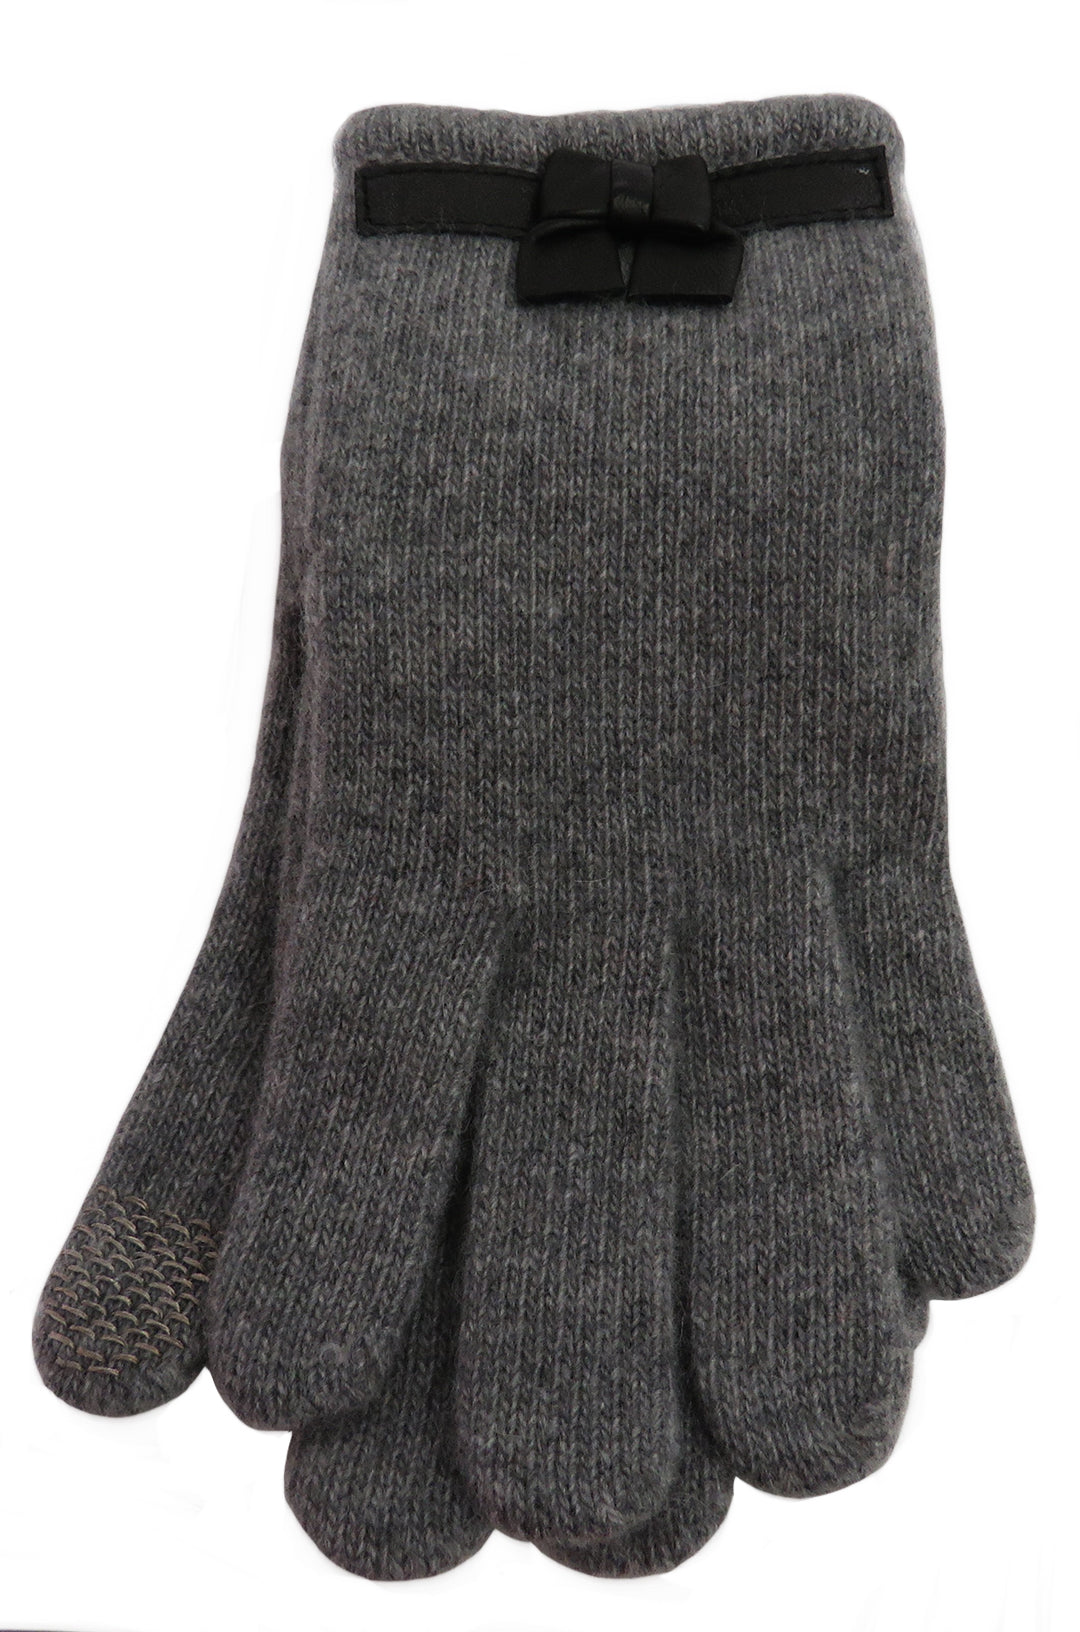 Forzieri Burgundy Leather Women's Gloves w/Cashmere Lining M, 7